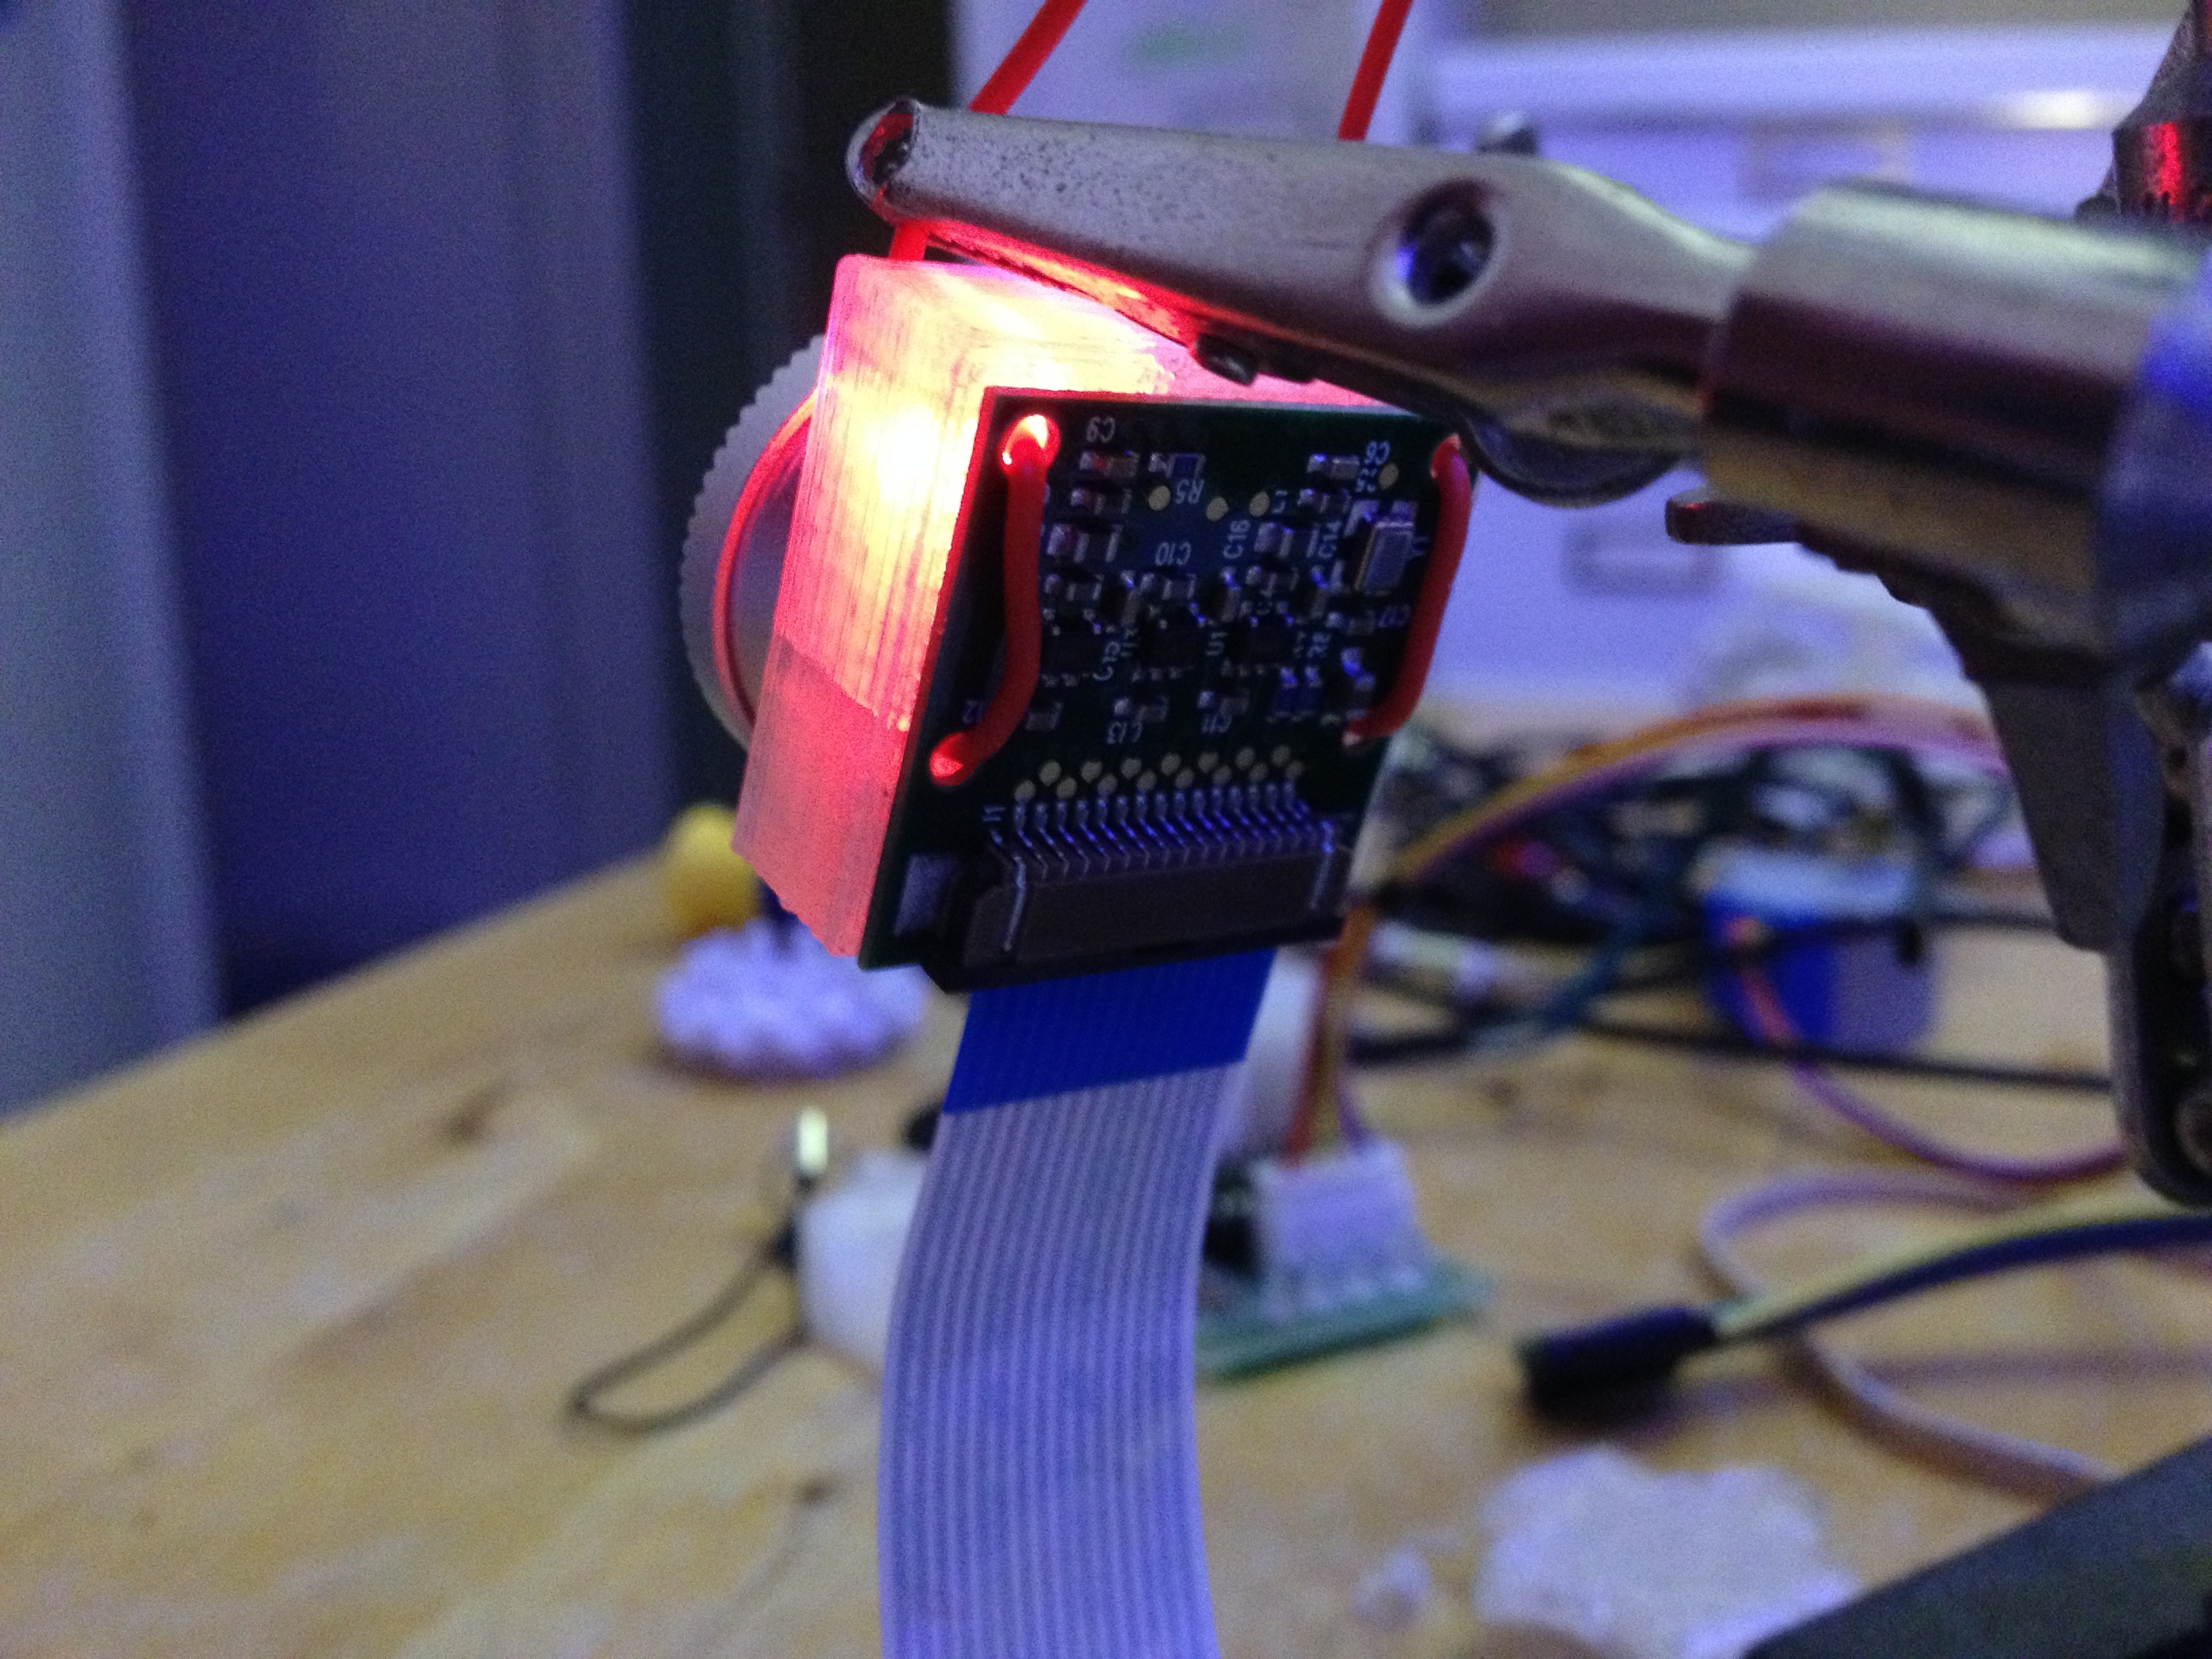 Raspberry pi camera holder, rear, showing a circuit board